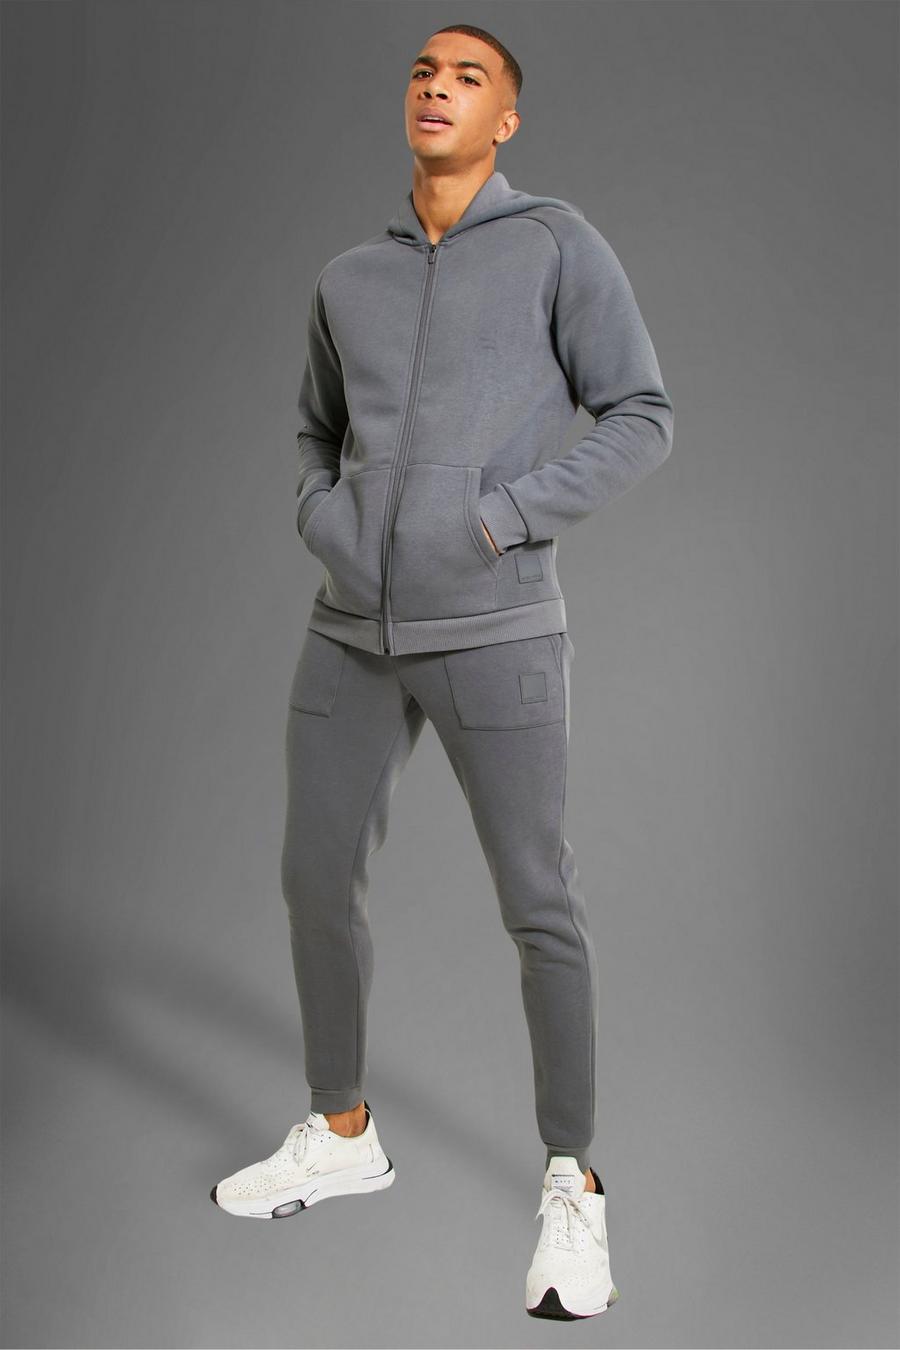 Chándal MAN Active deportivo con capucha y cremallera, Charcoal gris